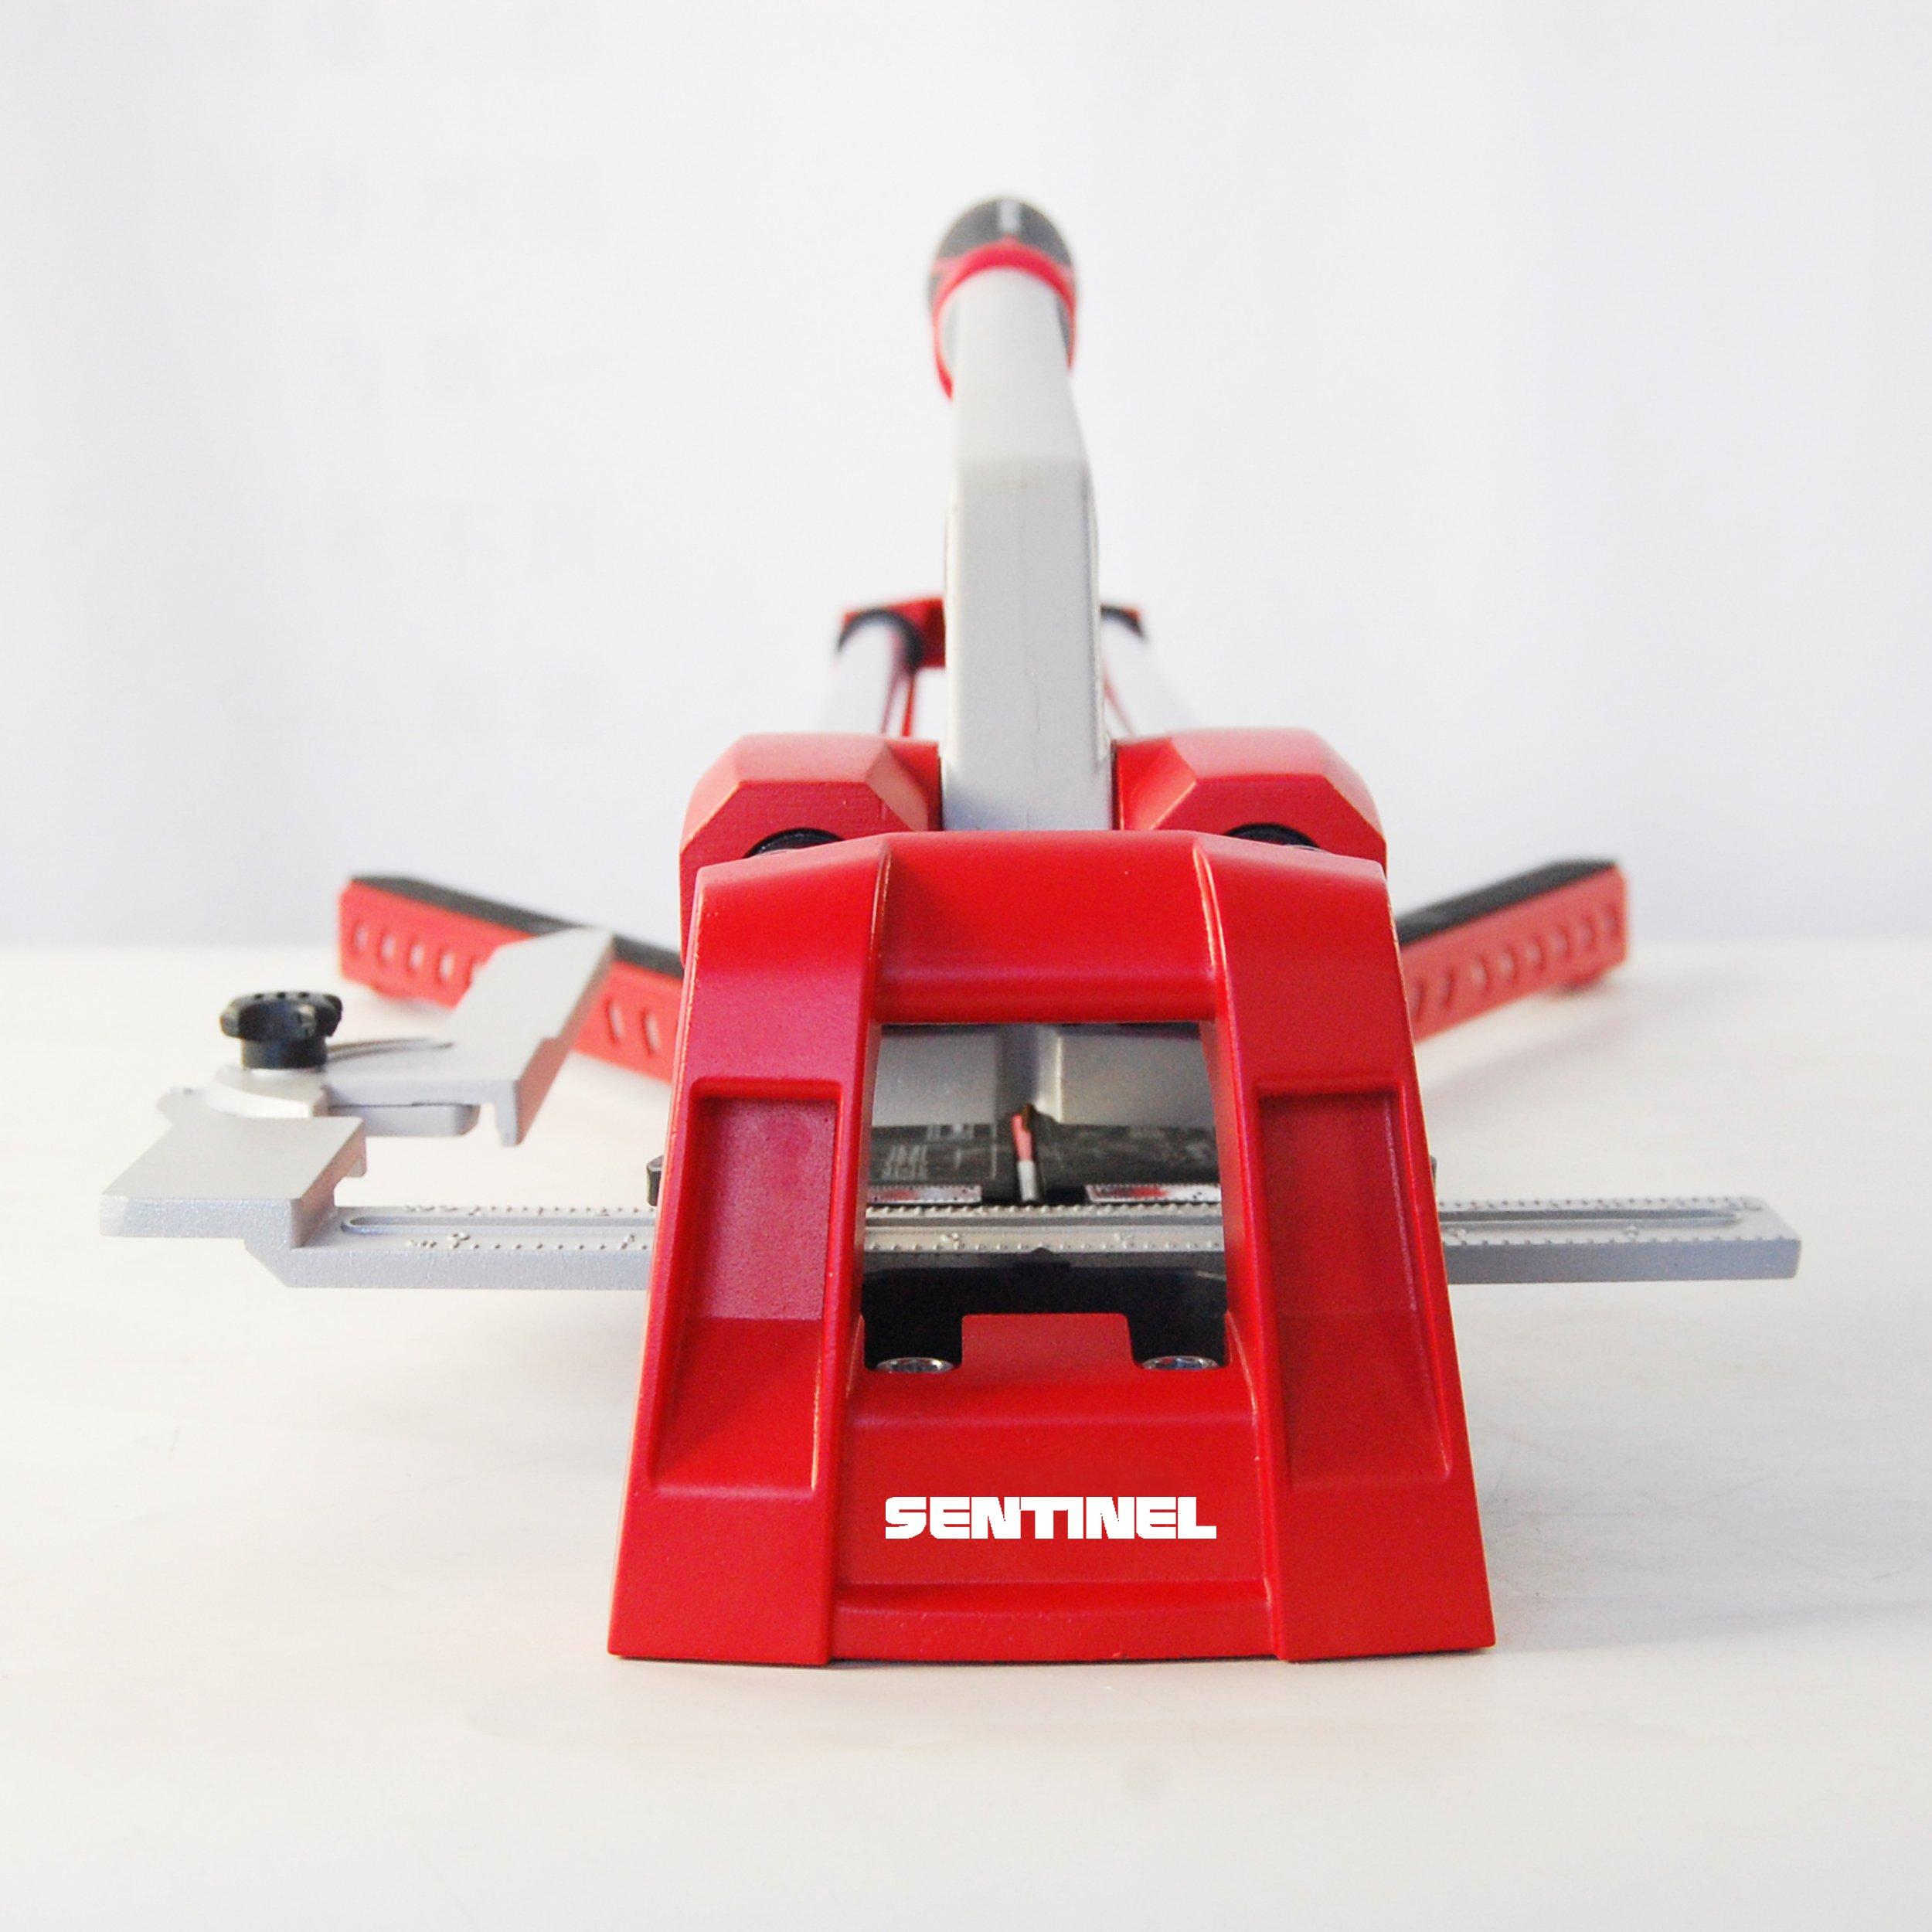 Sentinel 24in. Slim Tile Cutter